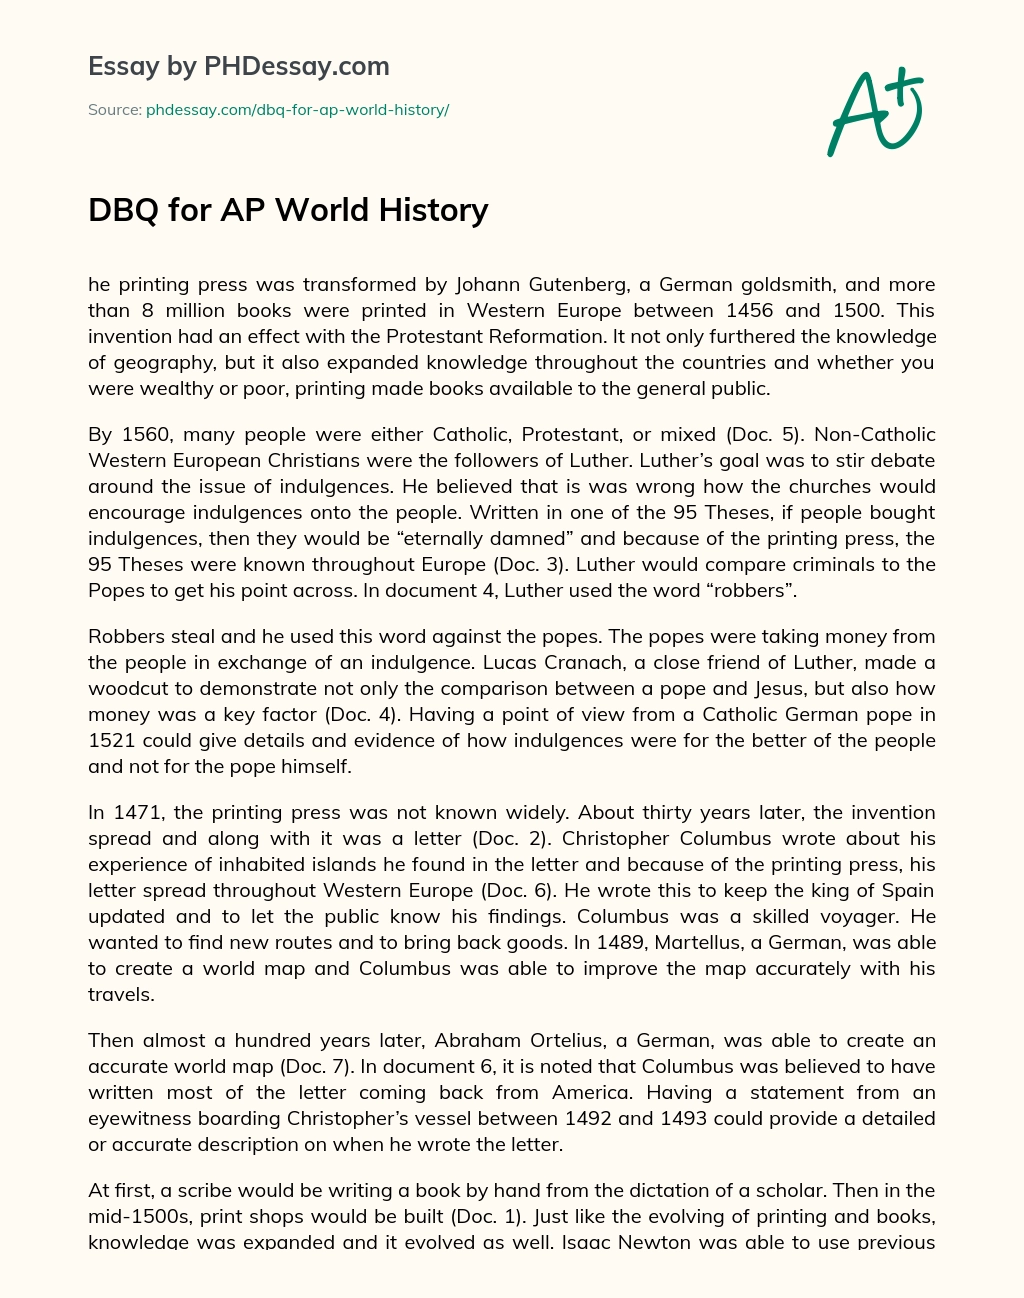 DBQ for AP World History essay